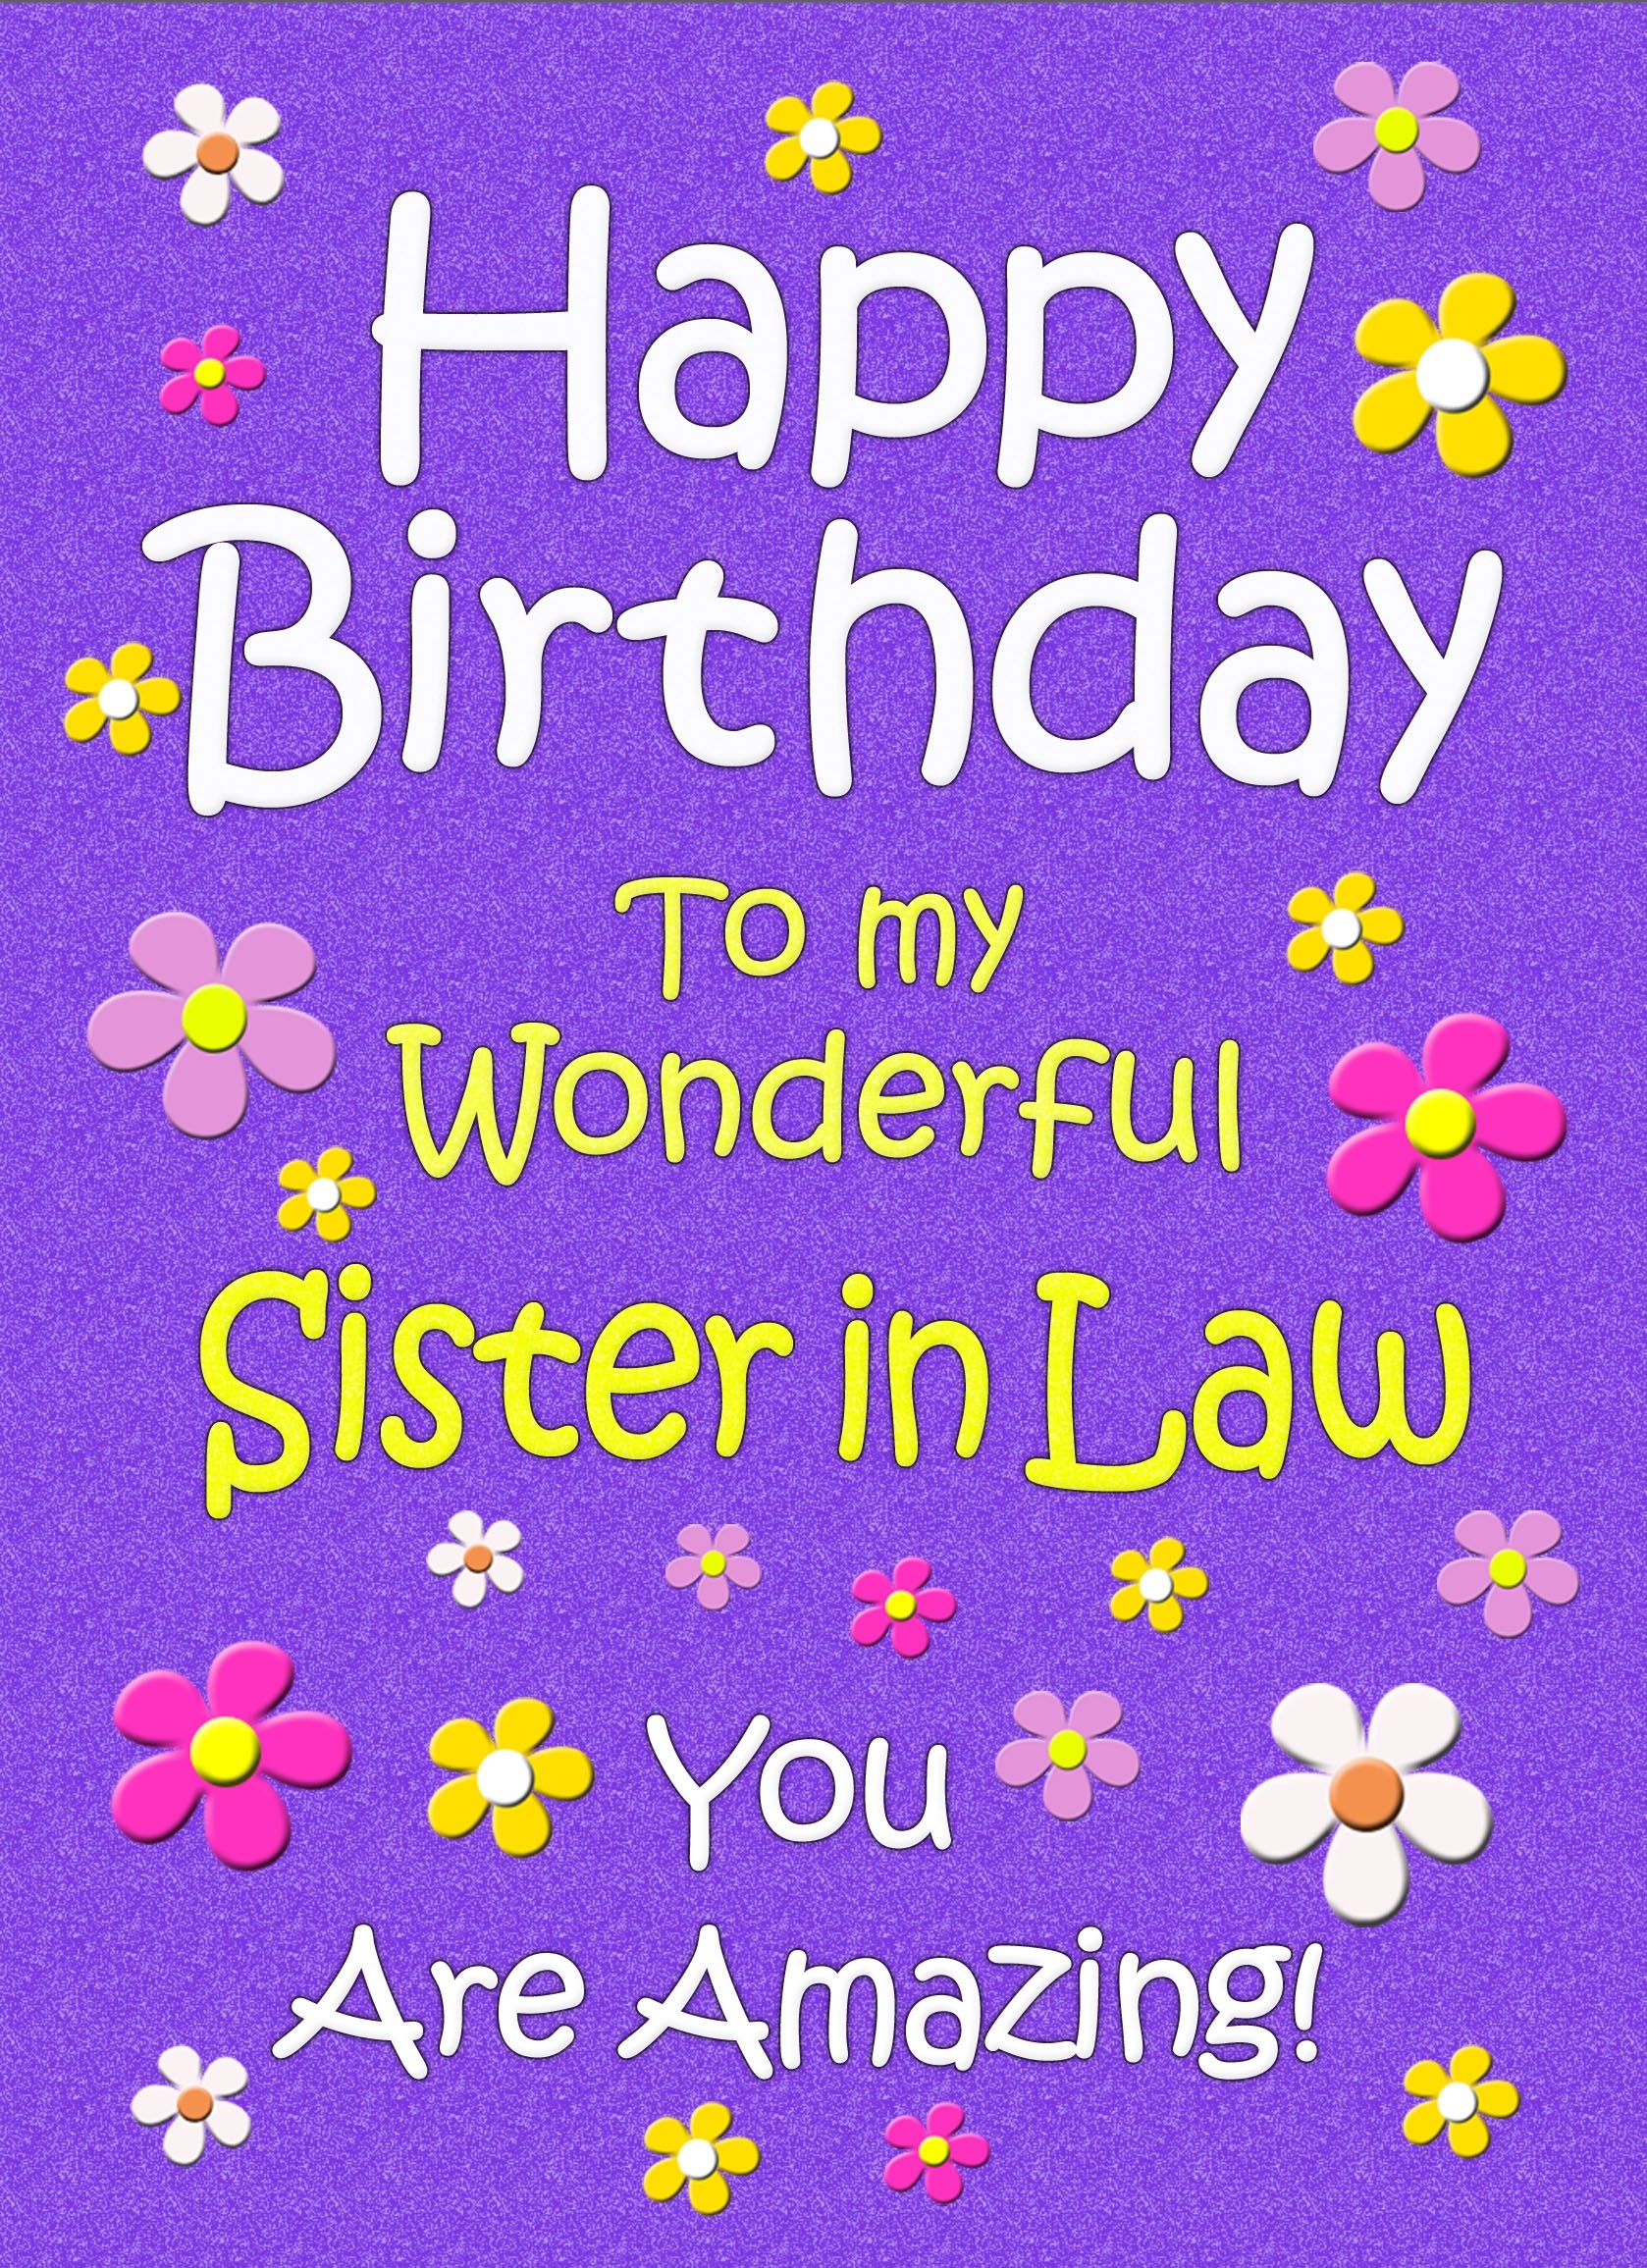 Sister in Law Birthday Card (Purple)